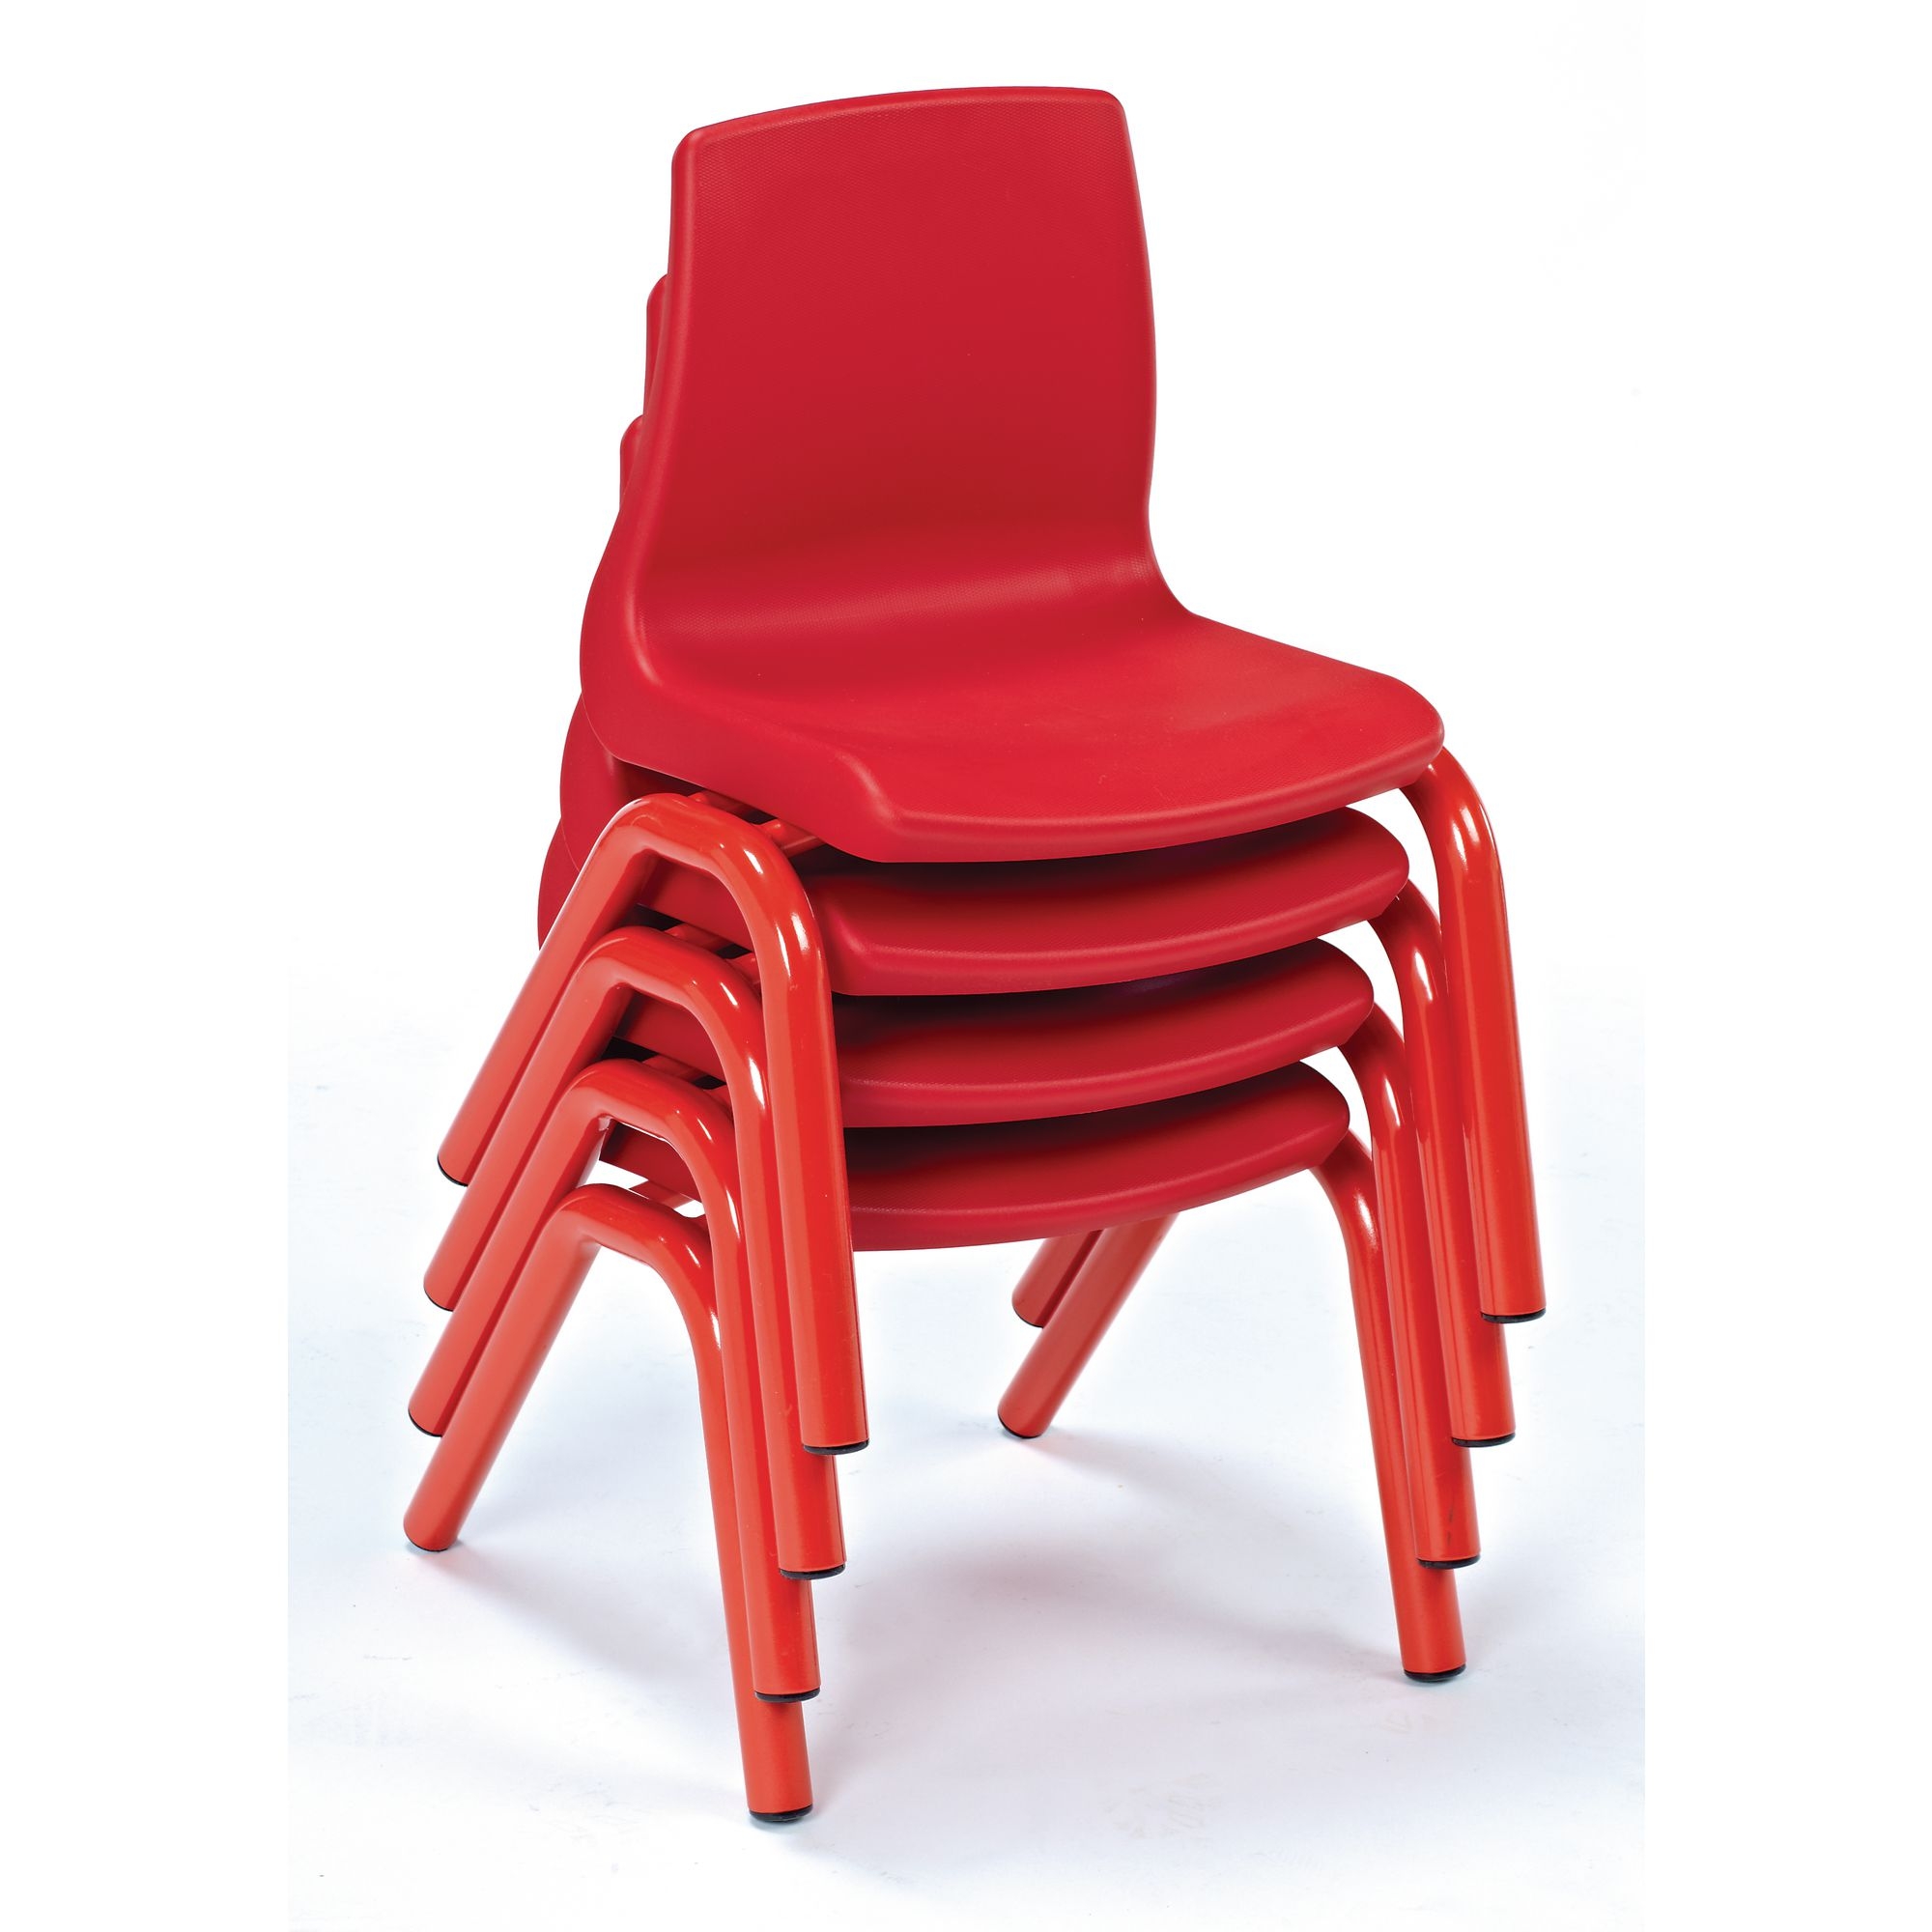 Harlequin Chairs - Pre School - Seat height: 200mm - Purple